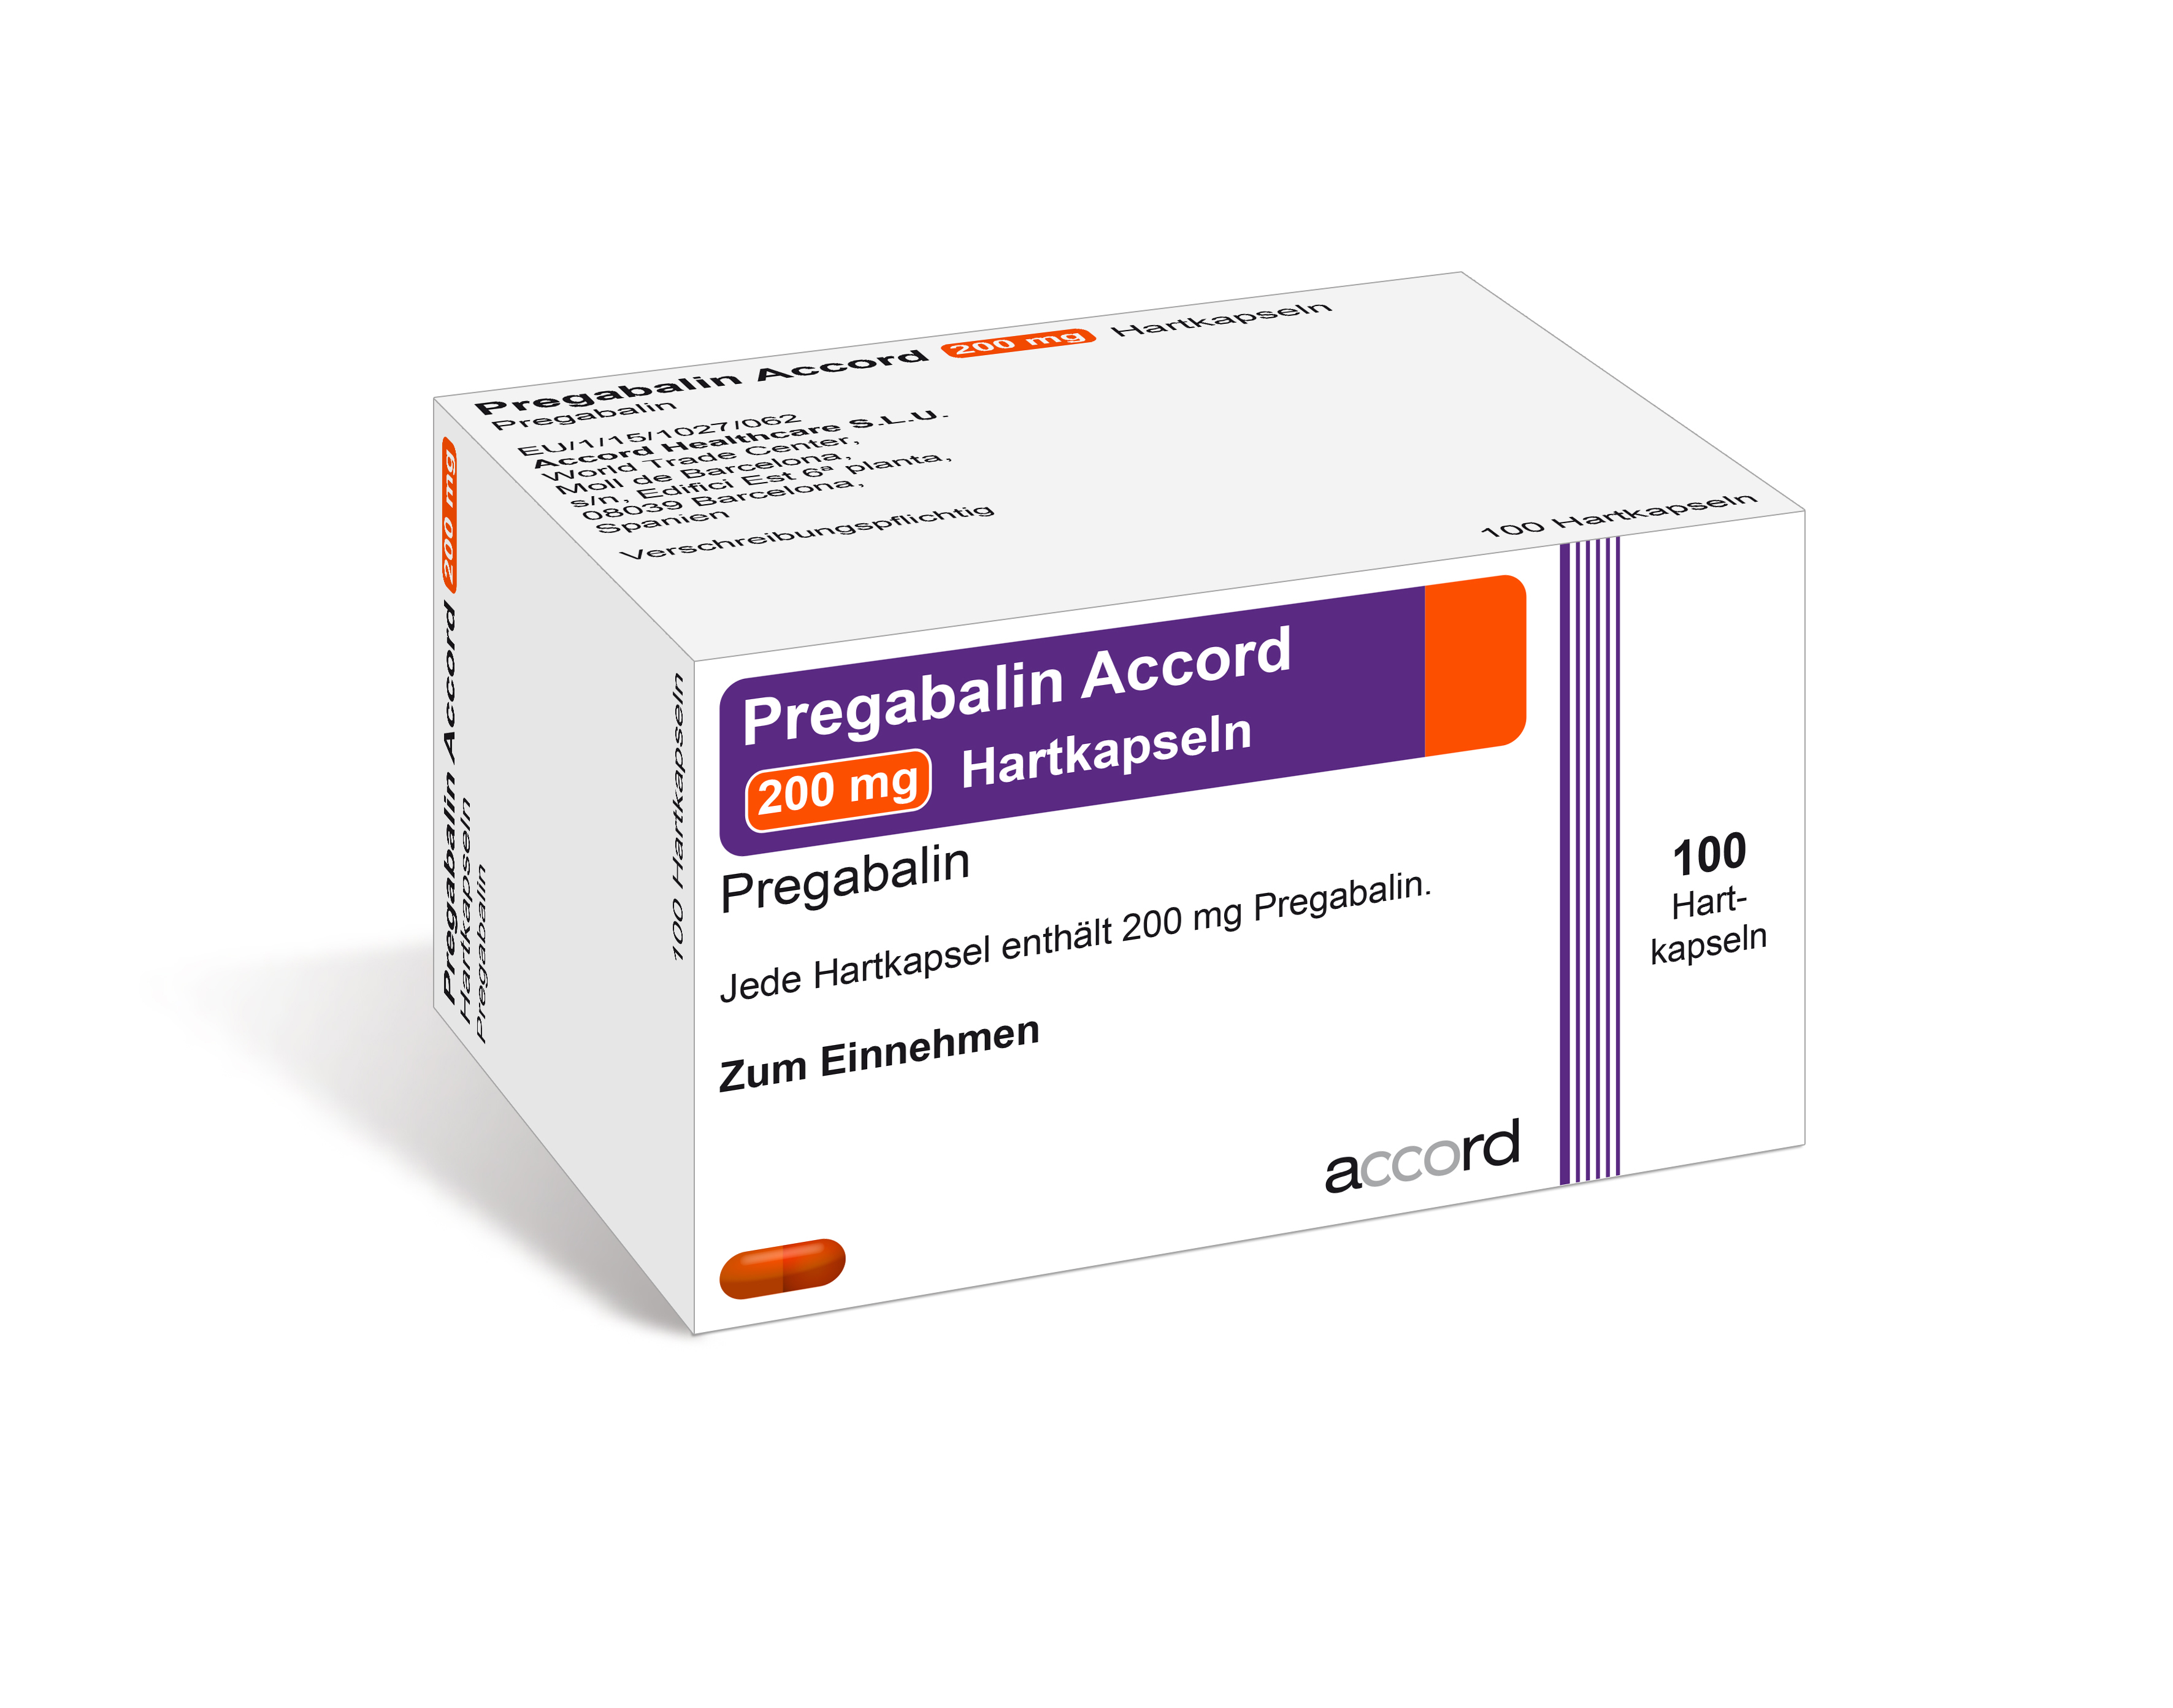 Accord Packshot Pregabalin 200 mg